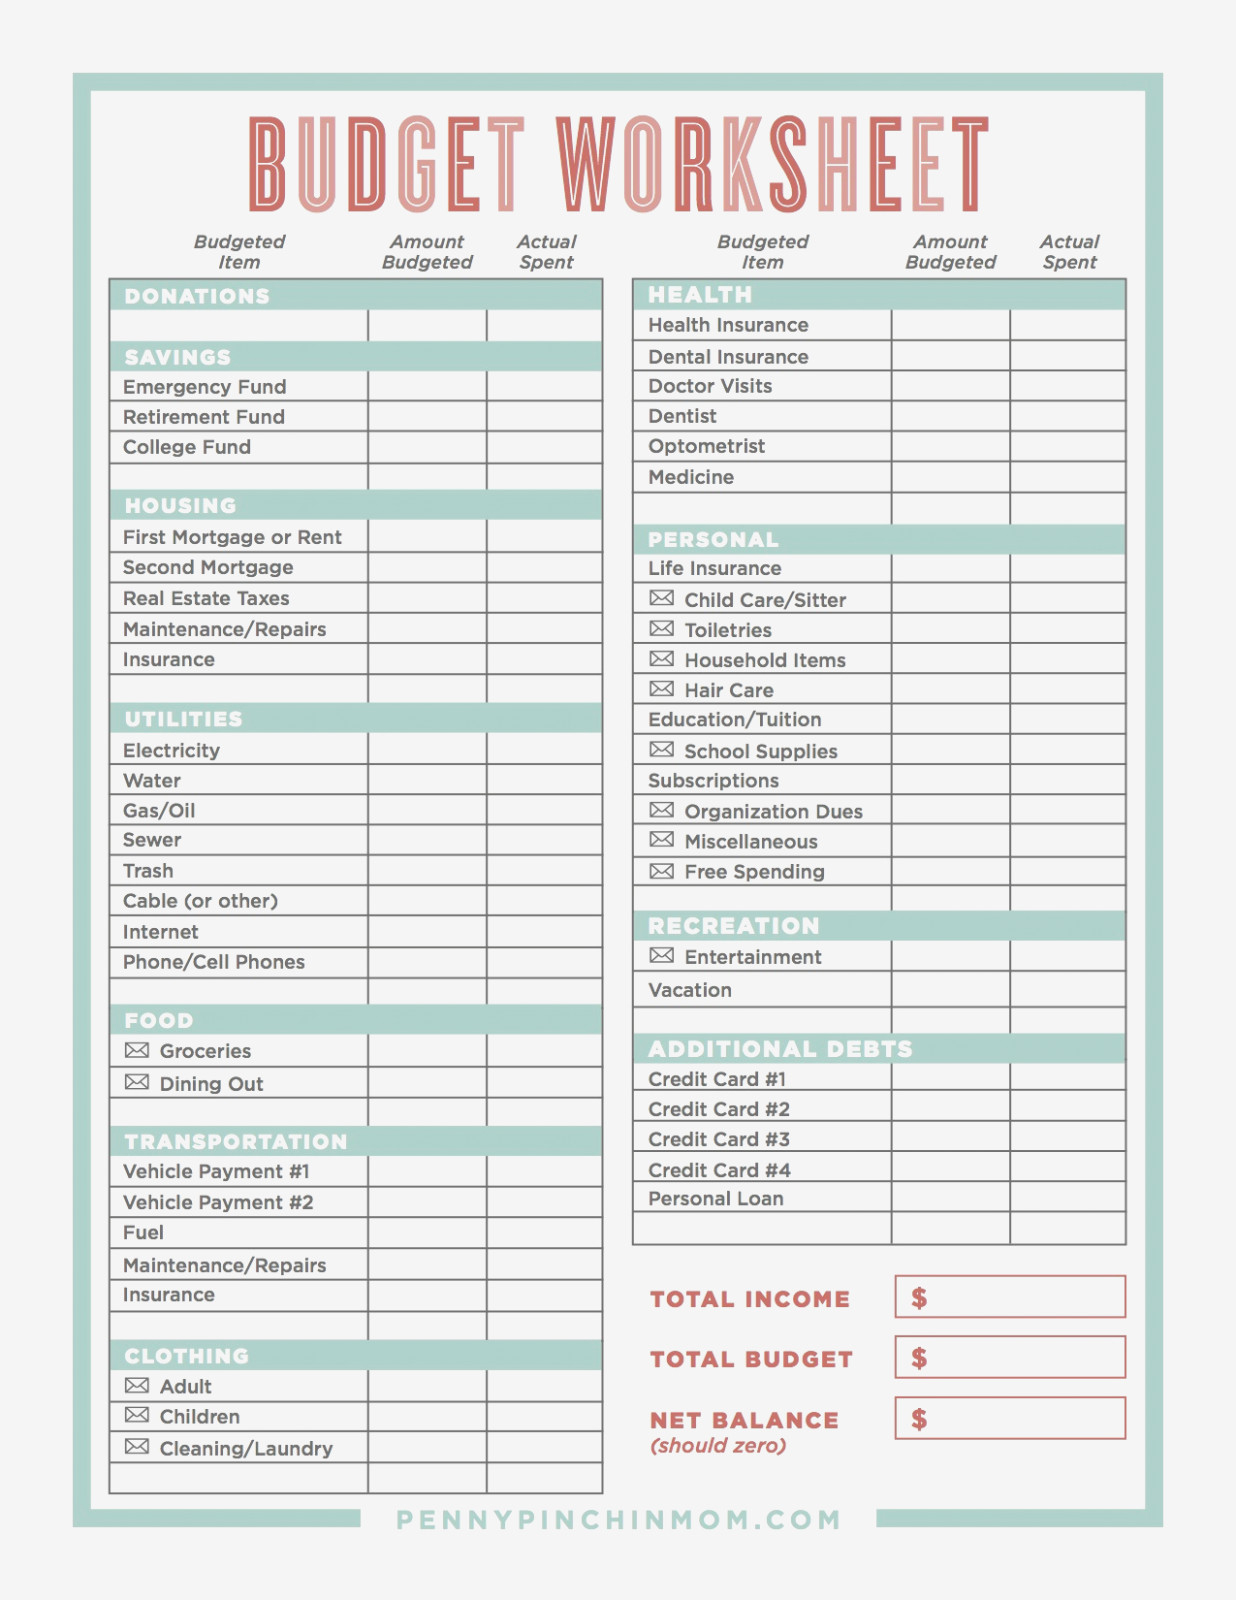 Free Printable Budget Worksheets Dave Ramsey Unique Bud Worksheet | Free Printable Budget Worksheets